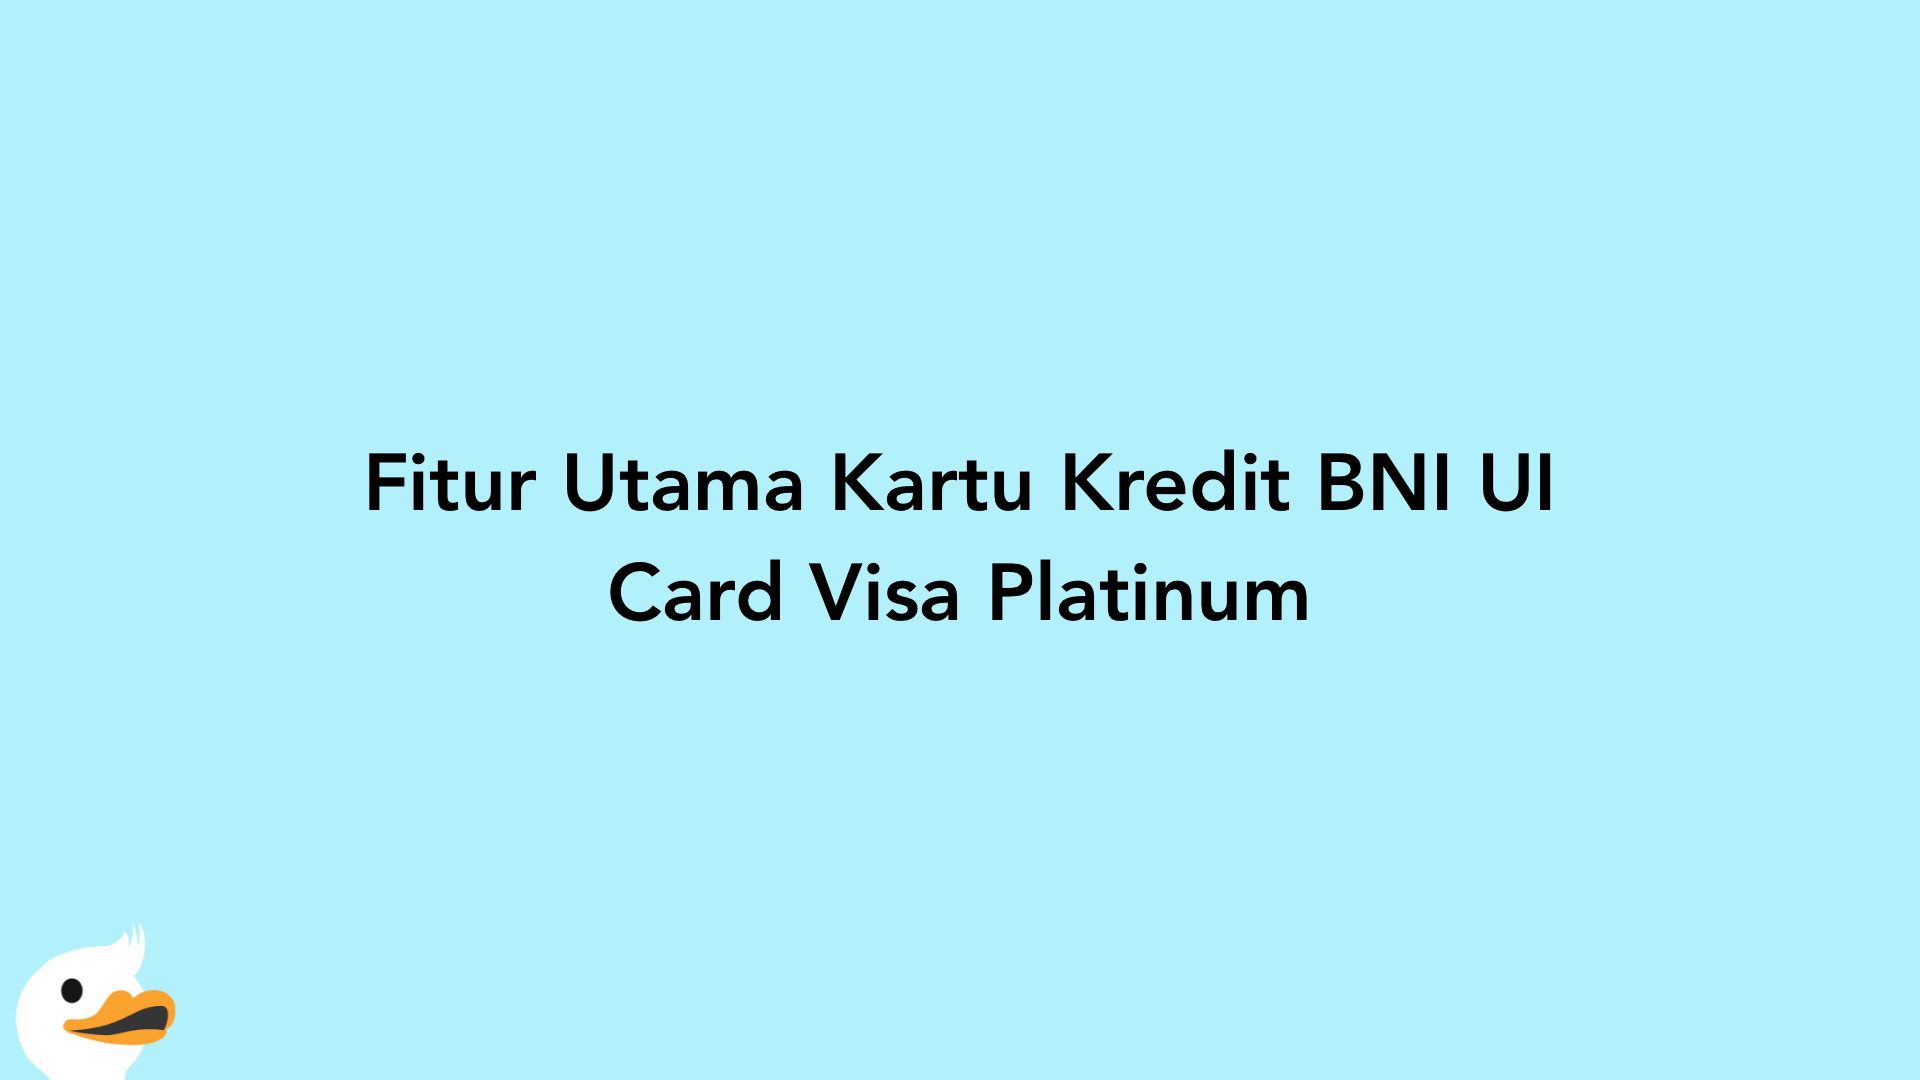 Fitur Utama Kartu Kredit BNI UI Card Visa Platinum